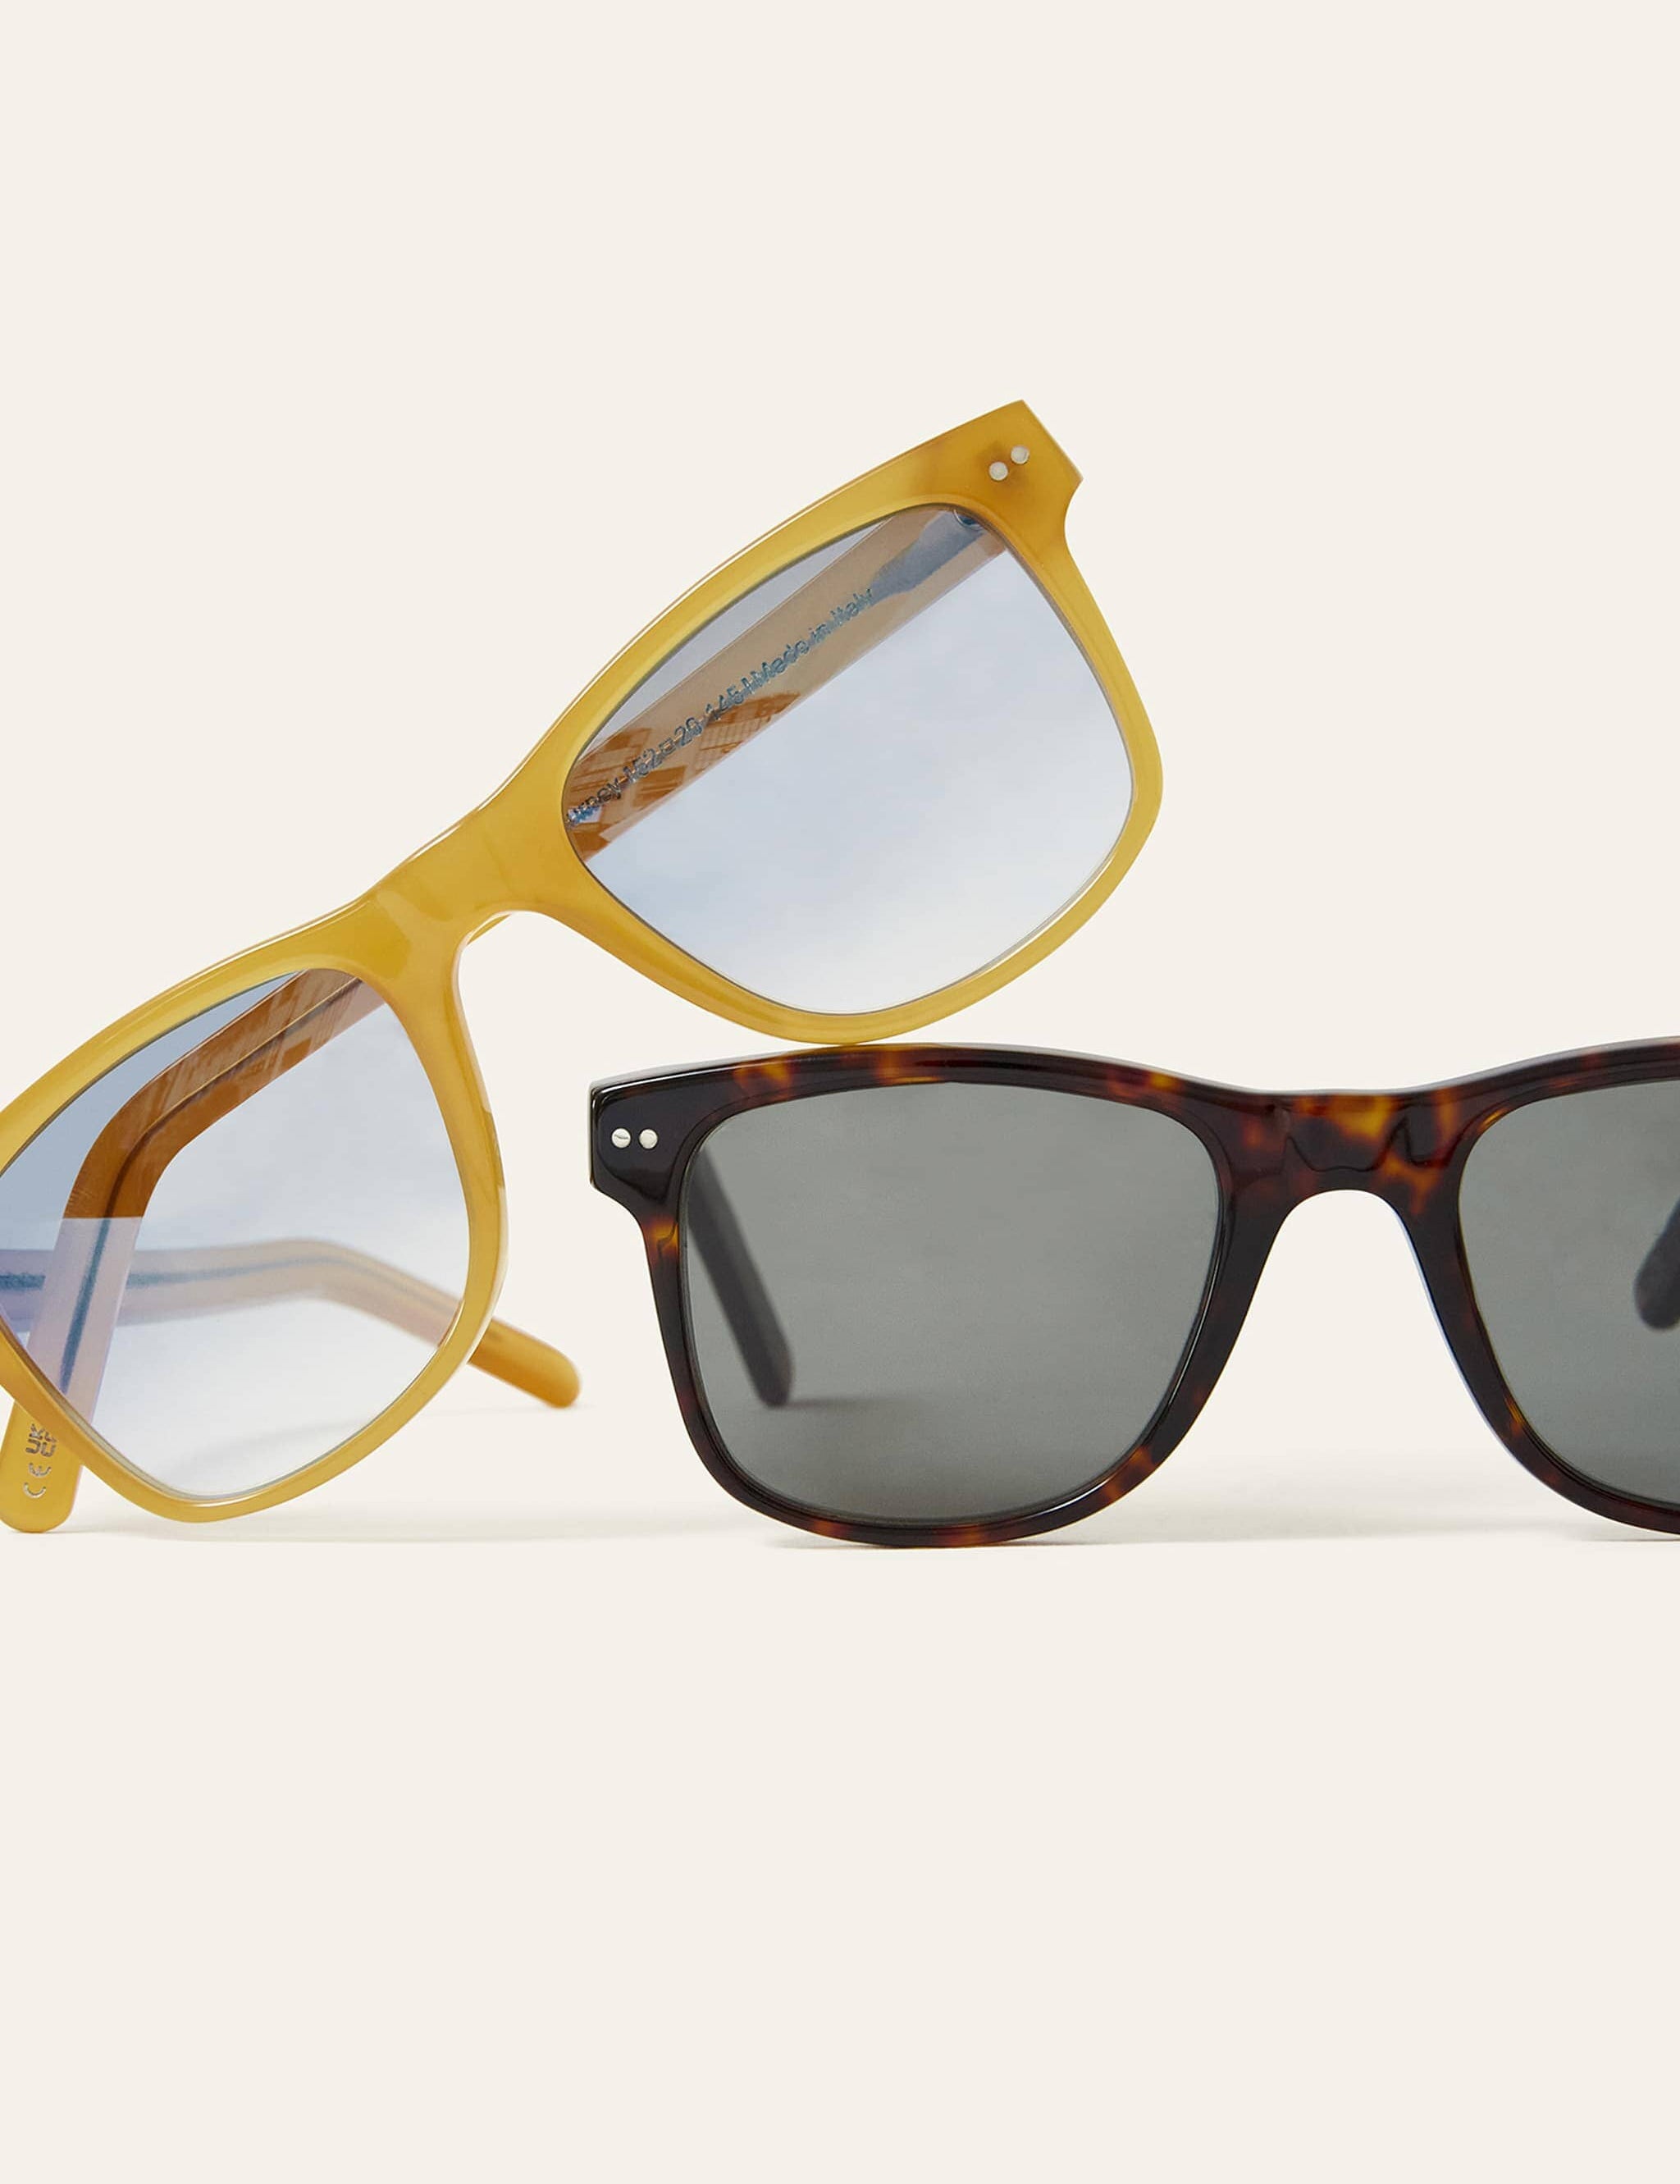 kingfisher-orange-sunglasses-499263.jpg